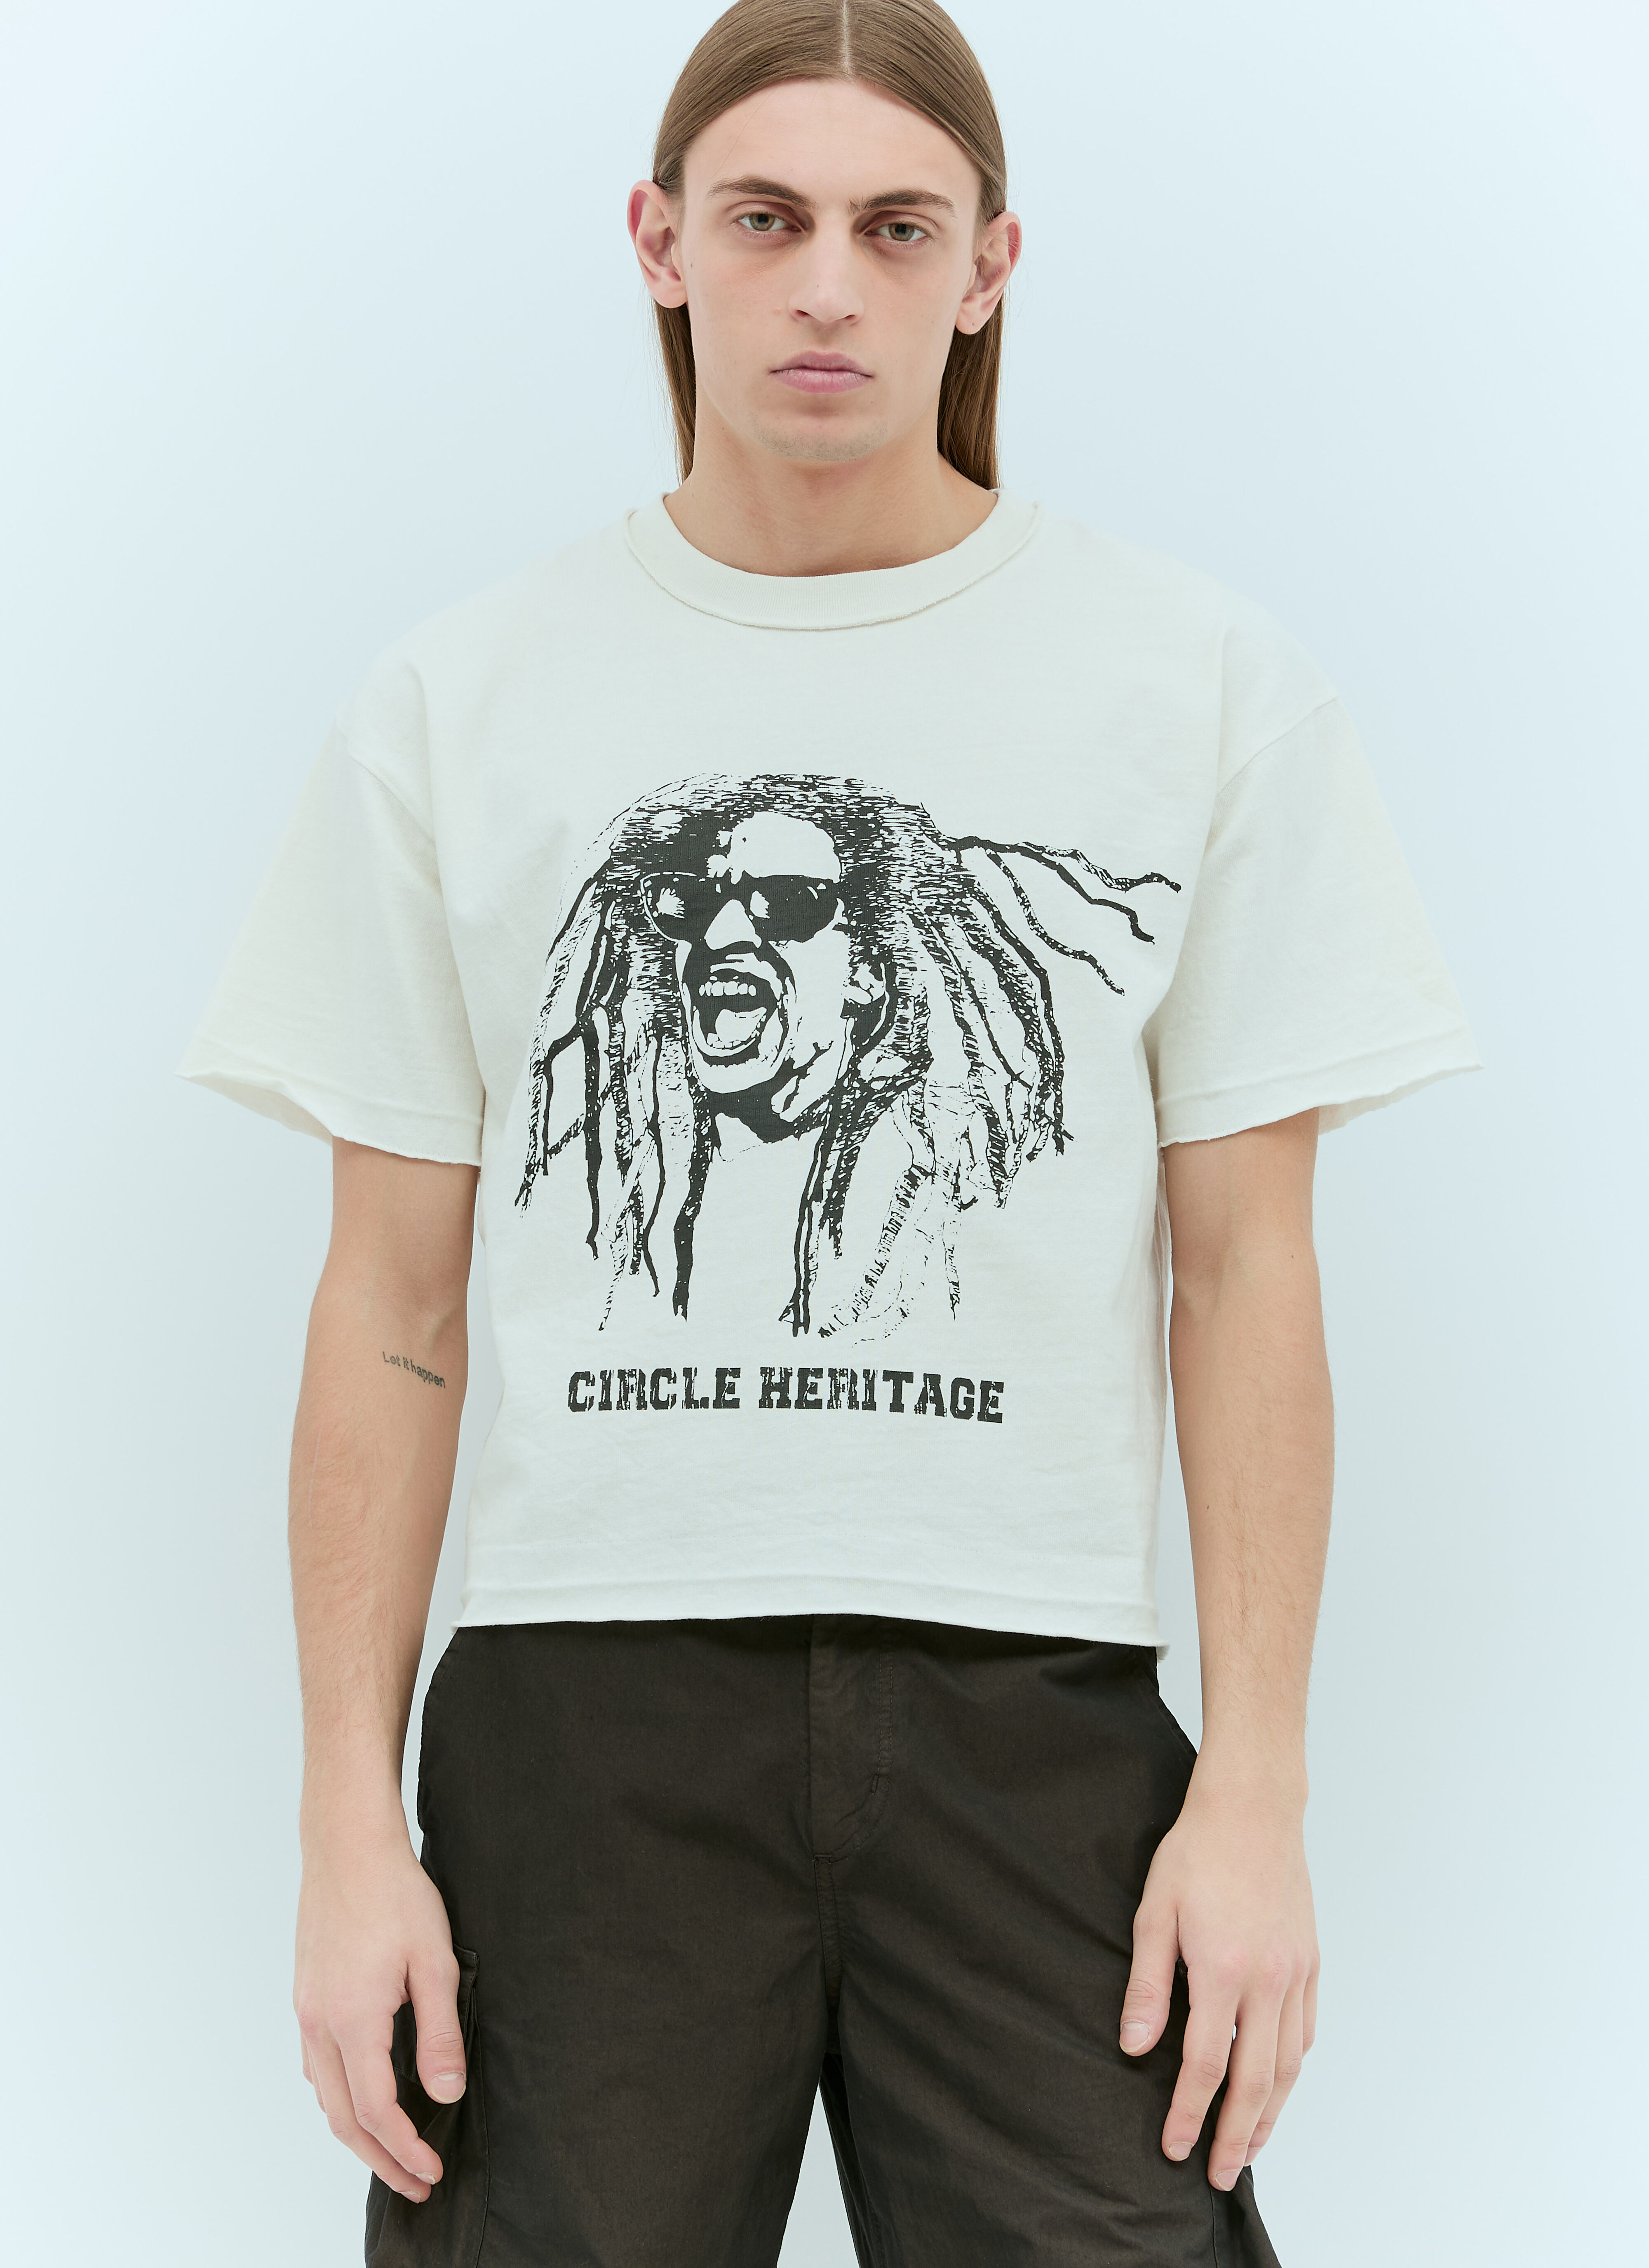 CIRCLE HERITAGE Raw Trims T-Shirt White che0155002